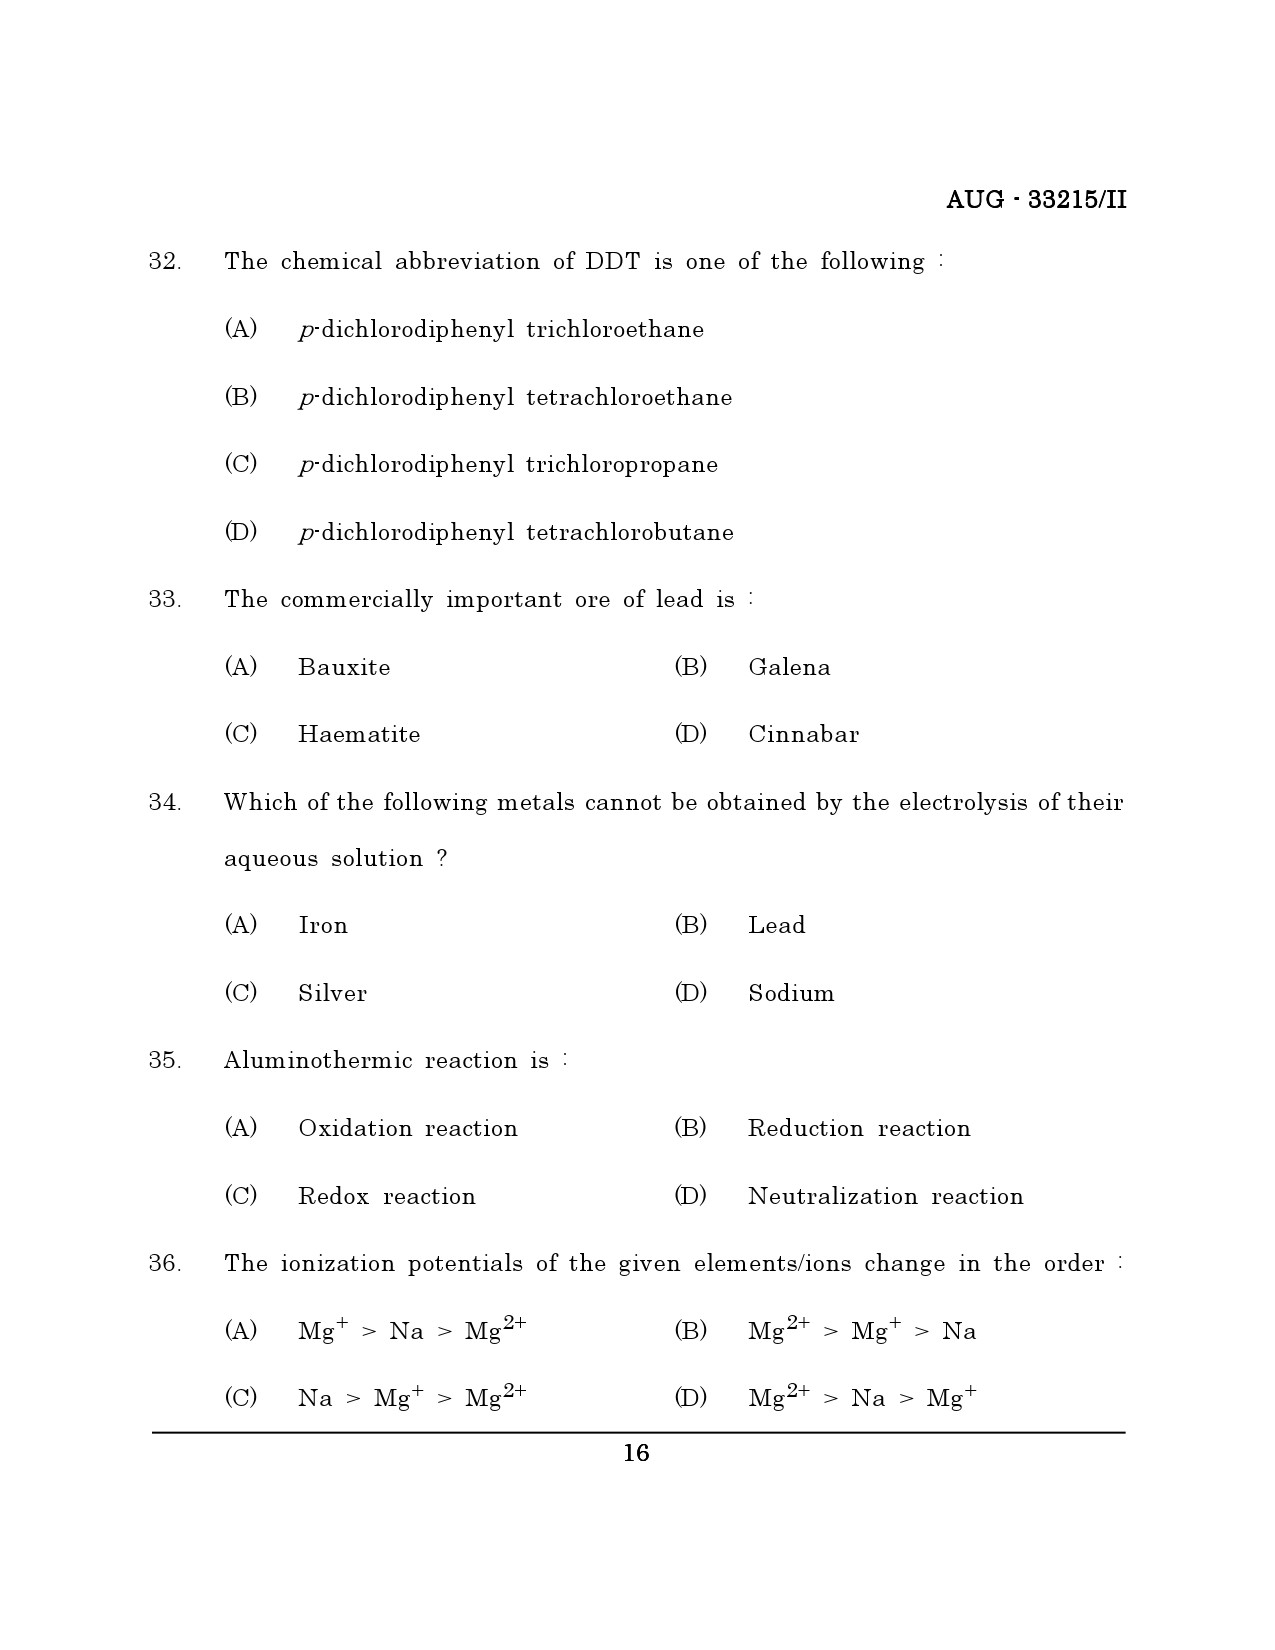 Maharashtra SET Chemical Sciences Question Paper II August 2015 15